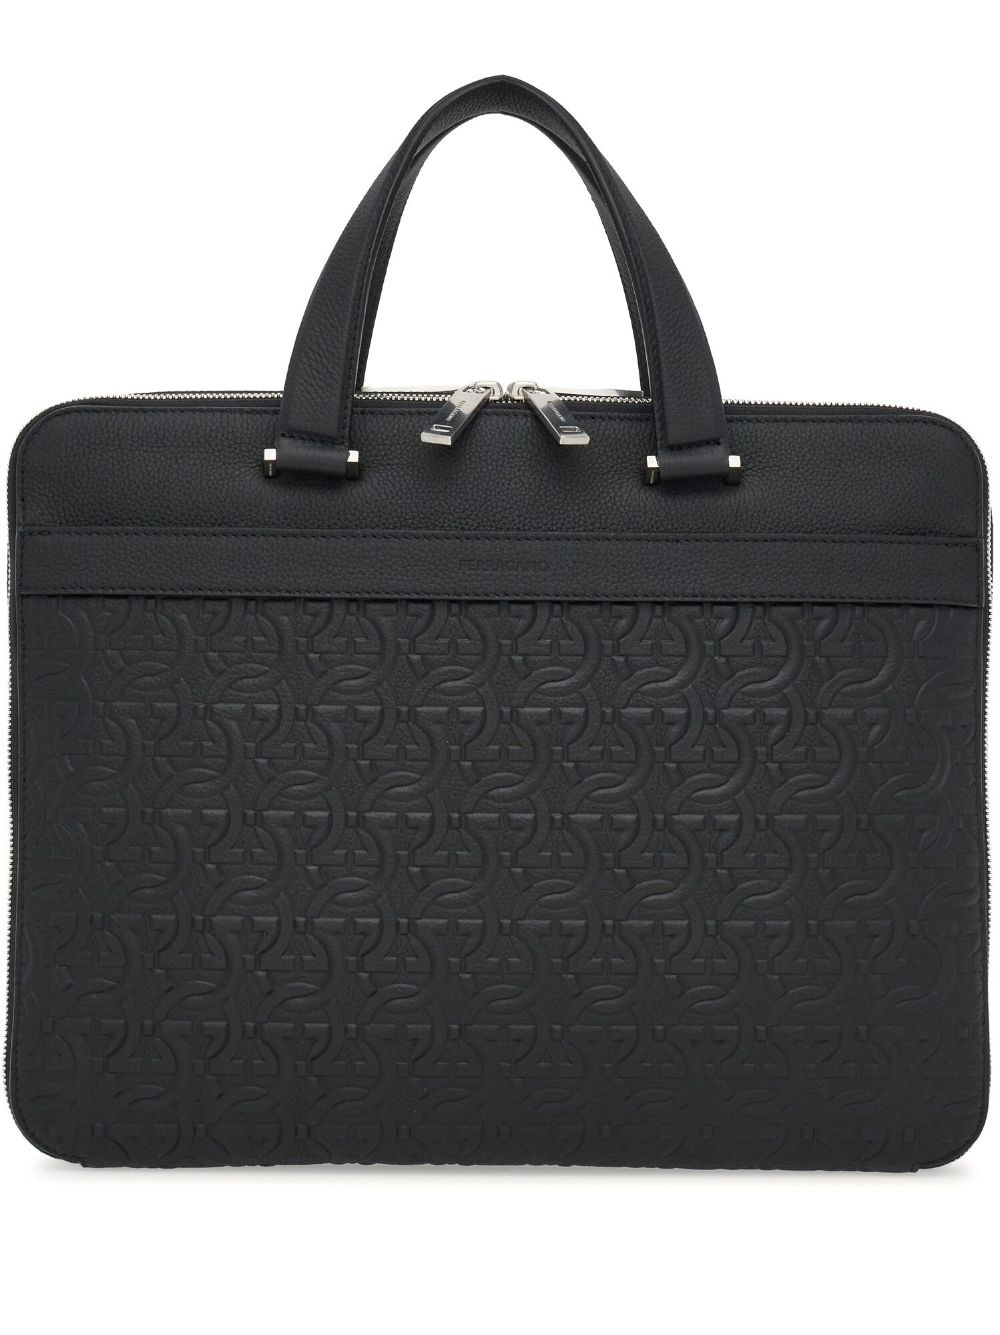 monogram-embossed leather briefcase - 1